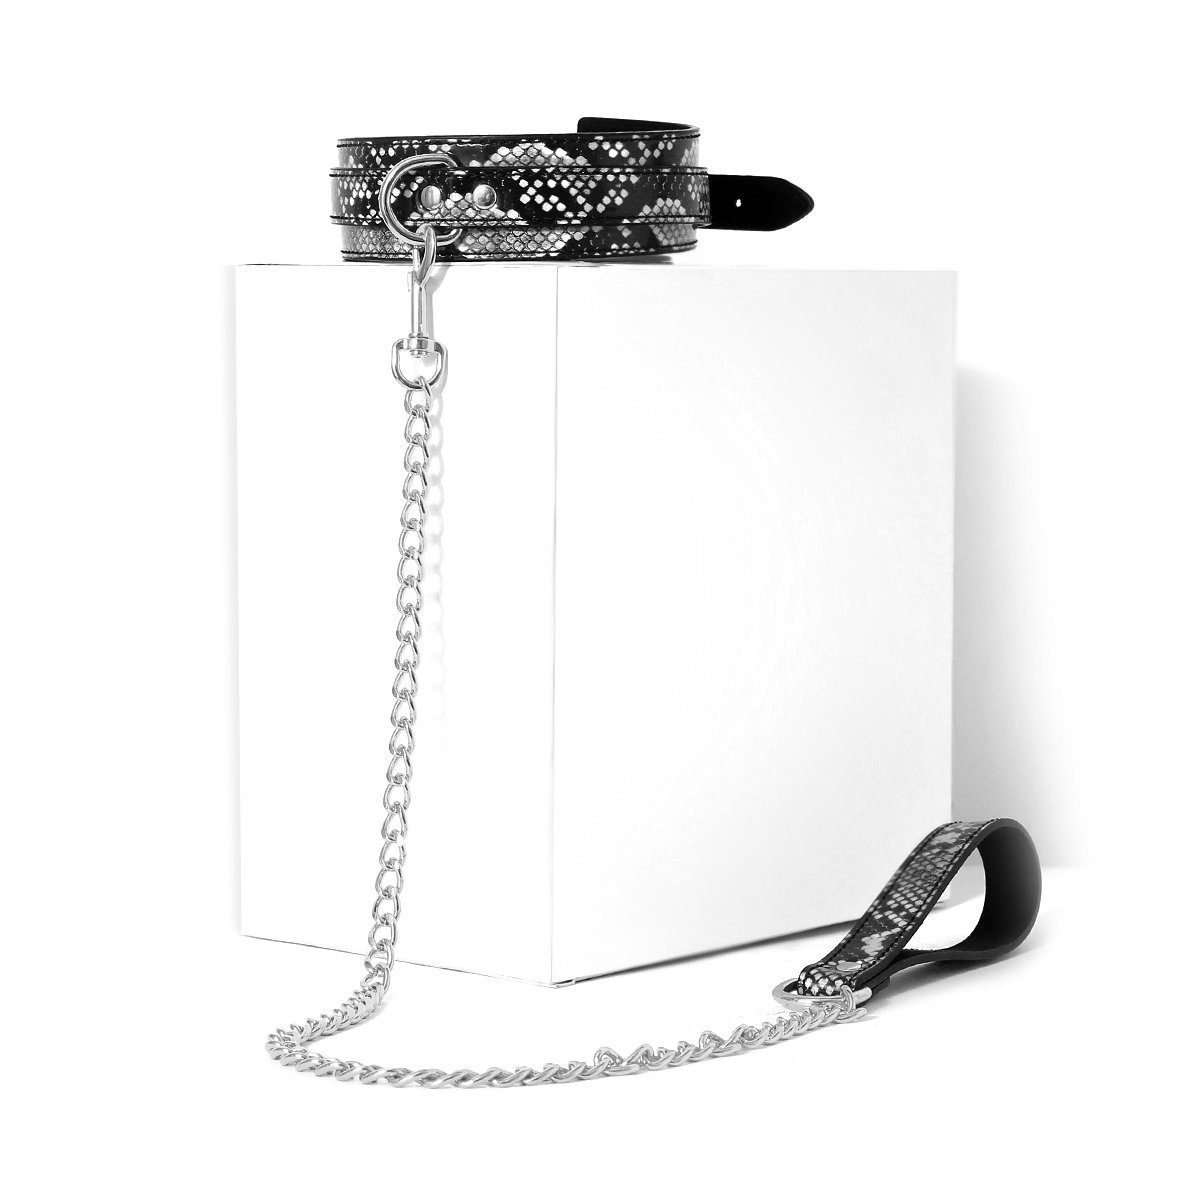 Black/Silver Reptile Collar Bondage-Band KIOTOS Leash with